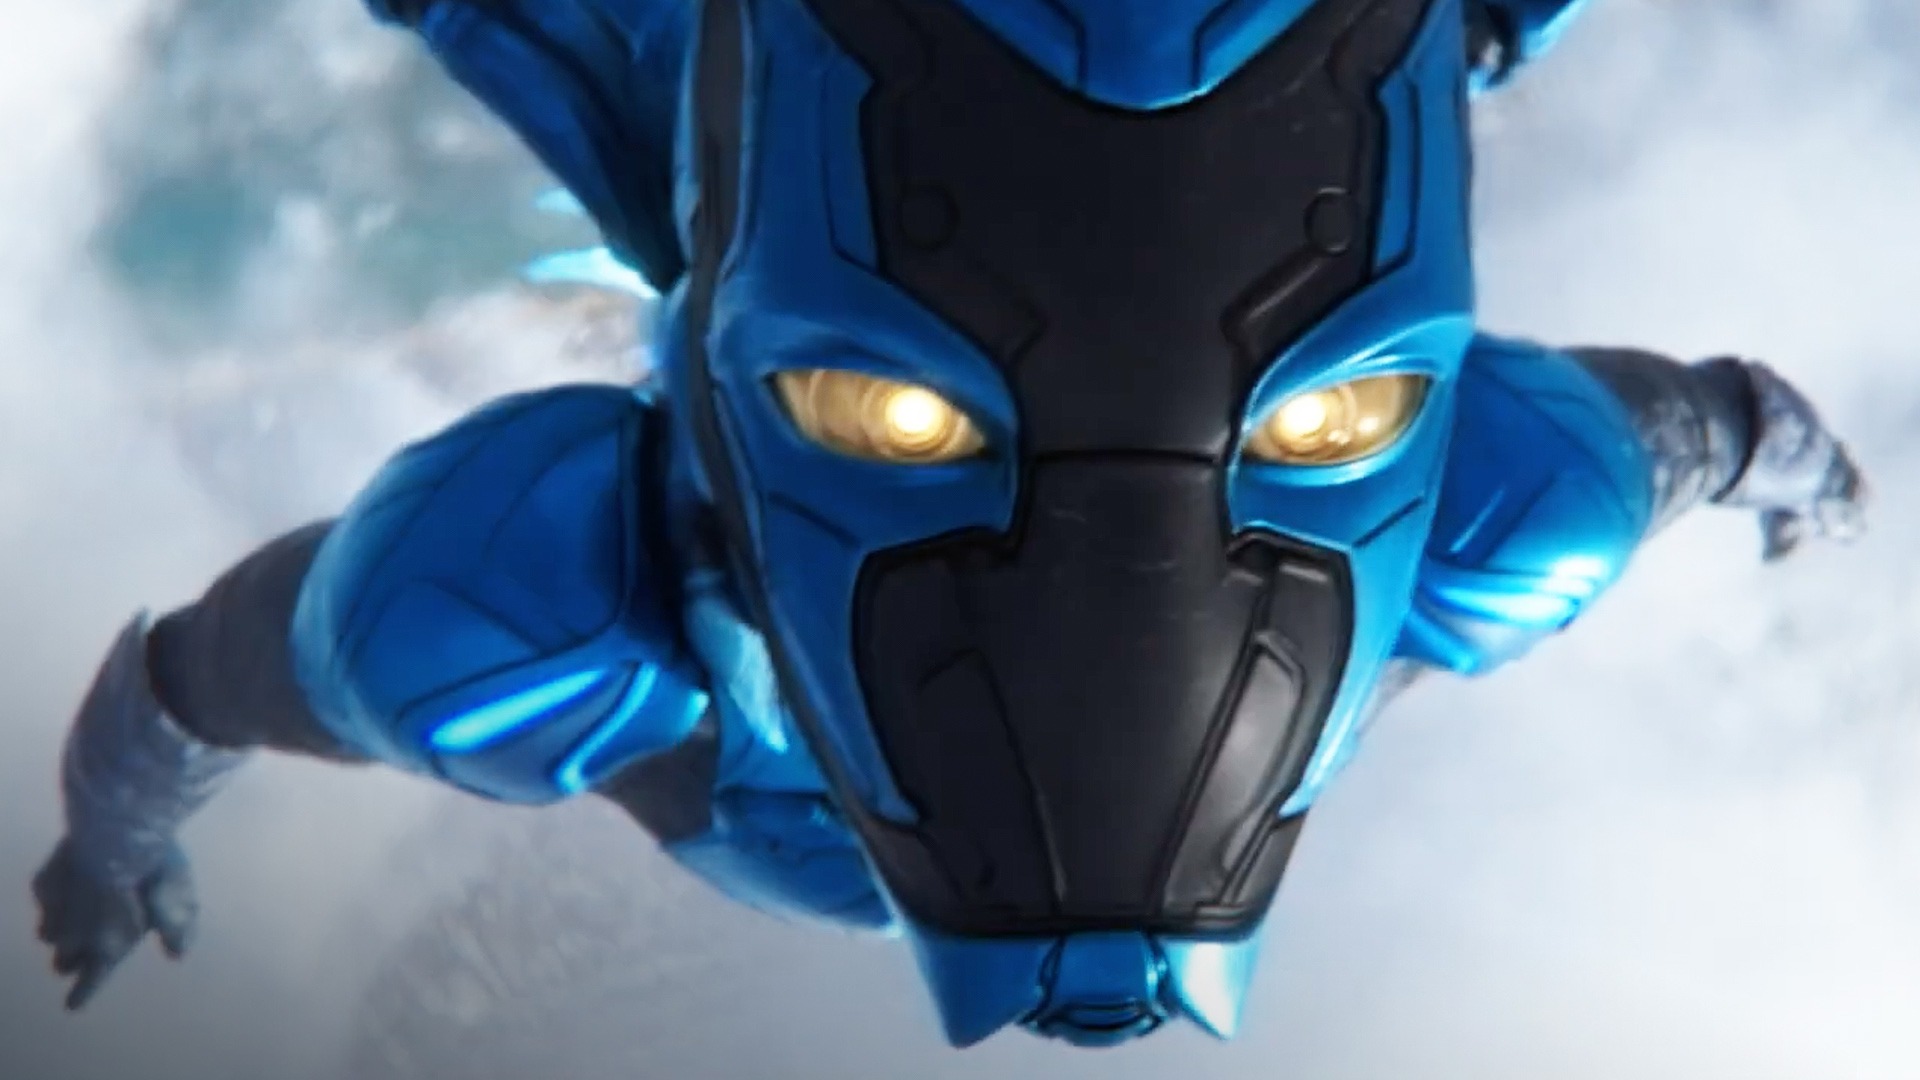 Blue Beetle Trailer Breakdown: 10 Details Explained